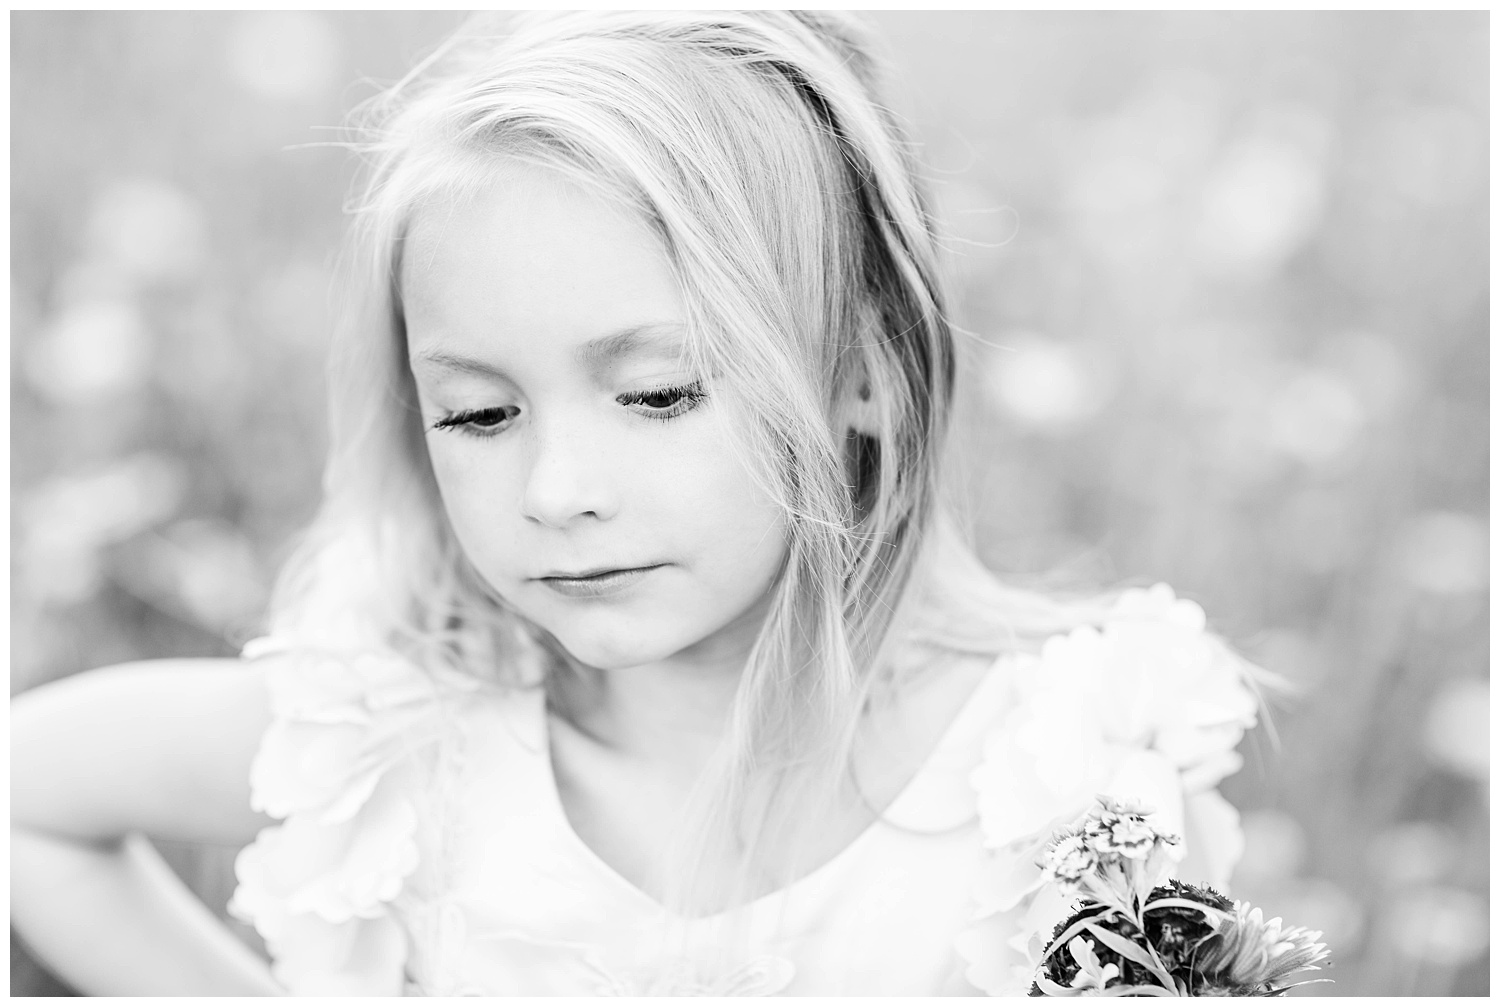 Liella is 5! | CB Studio Photography, LLC